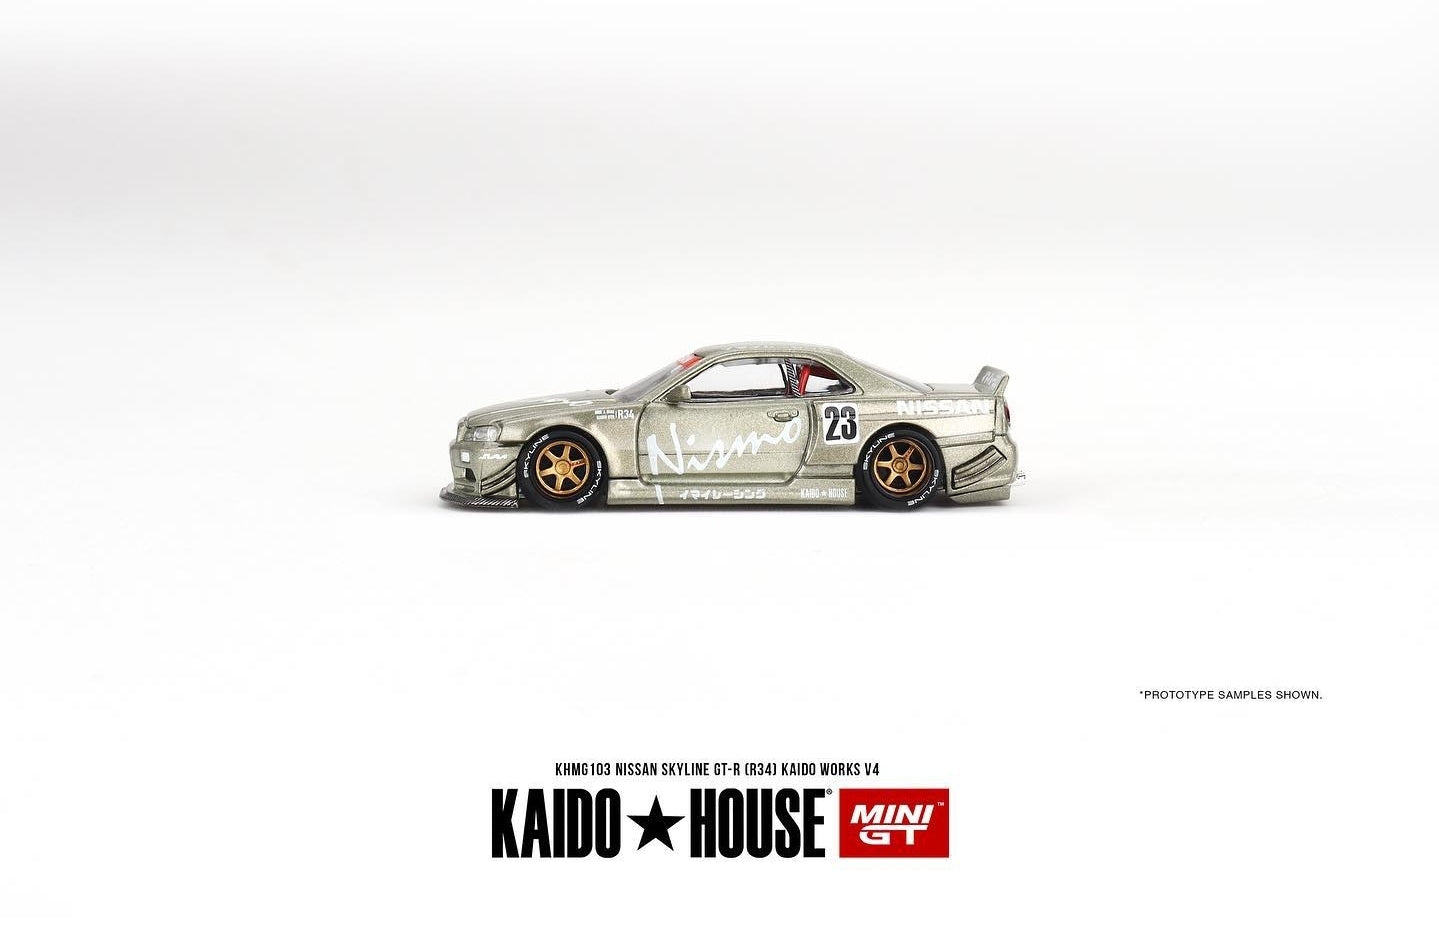 (Pre-Order) Tamiya x Kaido House Nissan Skyline GT-R (R34)